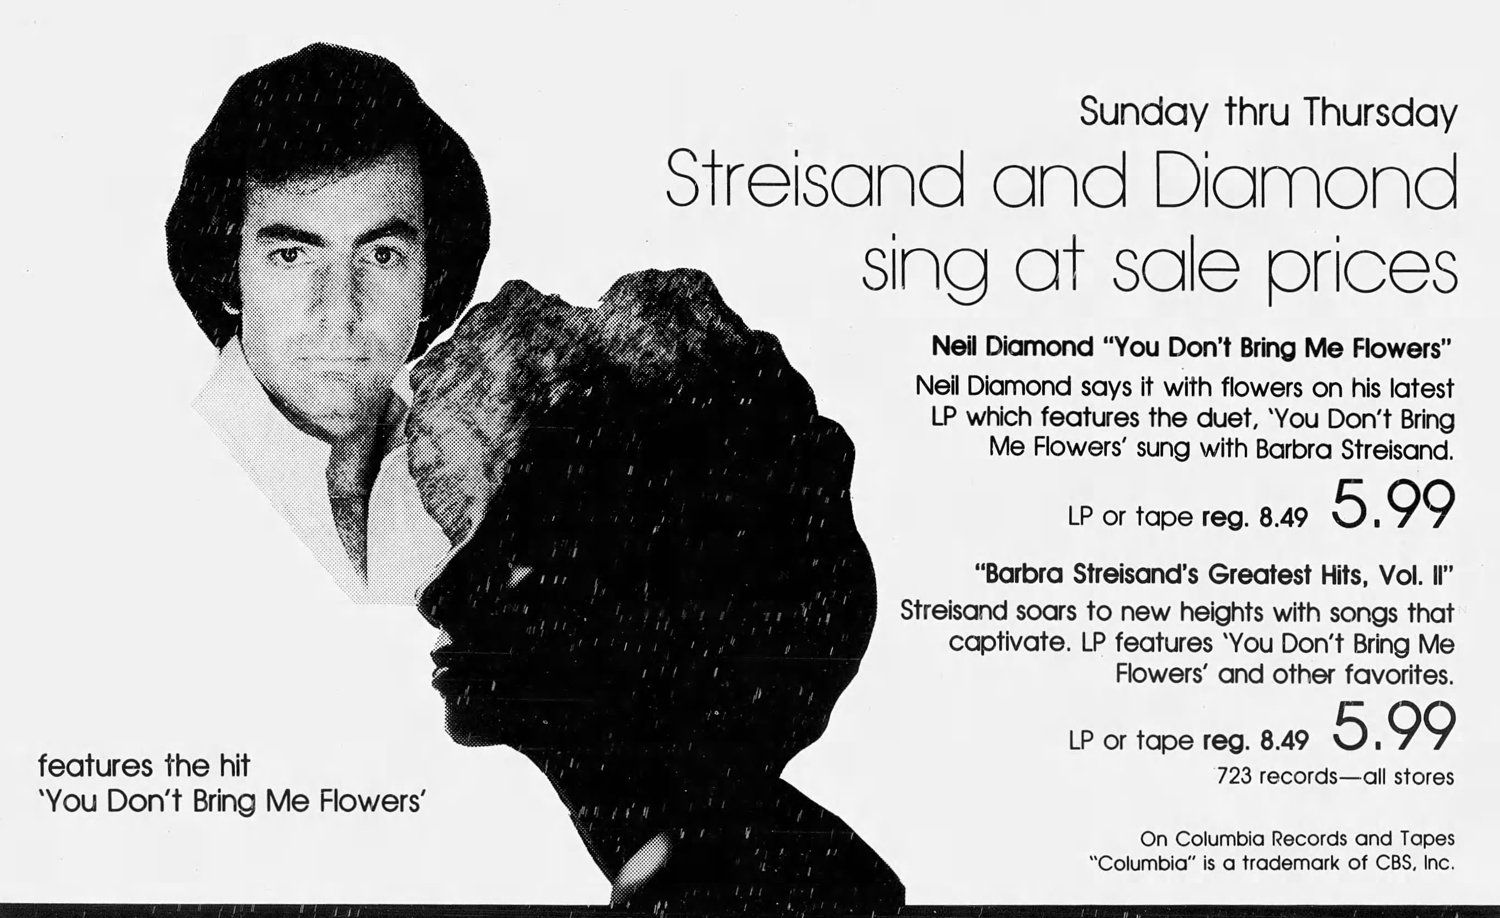 Newspaper ad for both Neil Diamond's album and Barbra Streisand's Greatest Hits Vol. 2